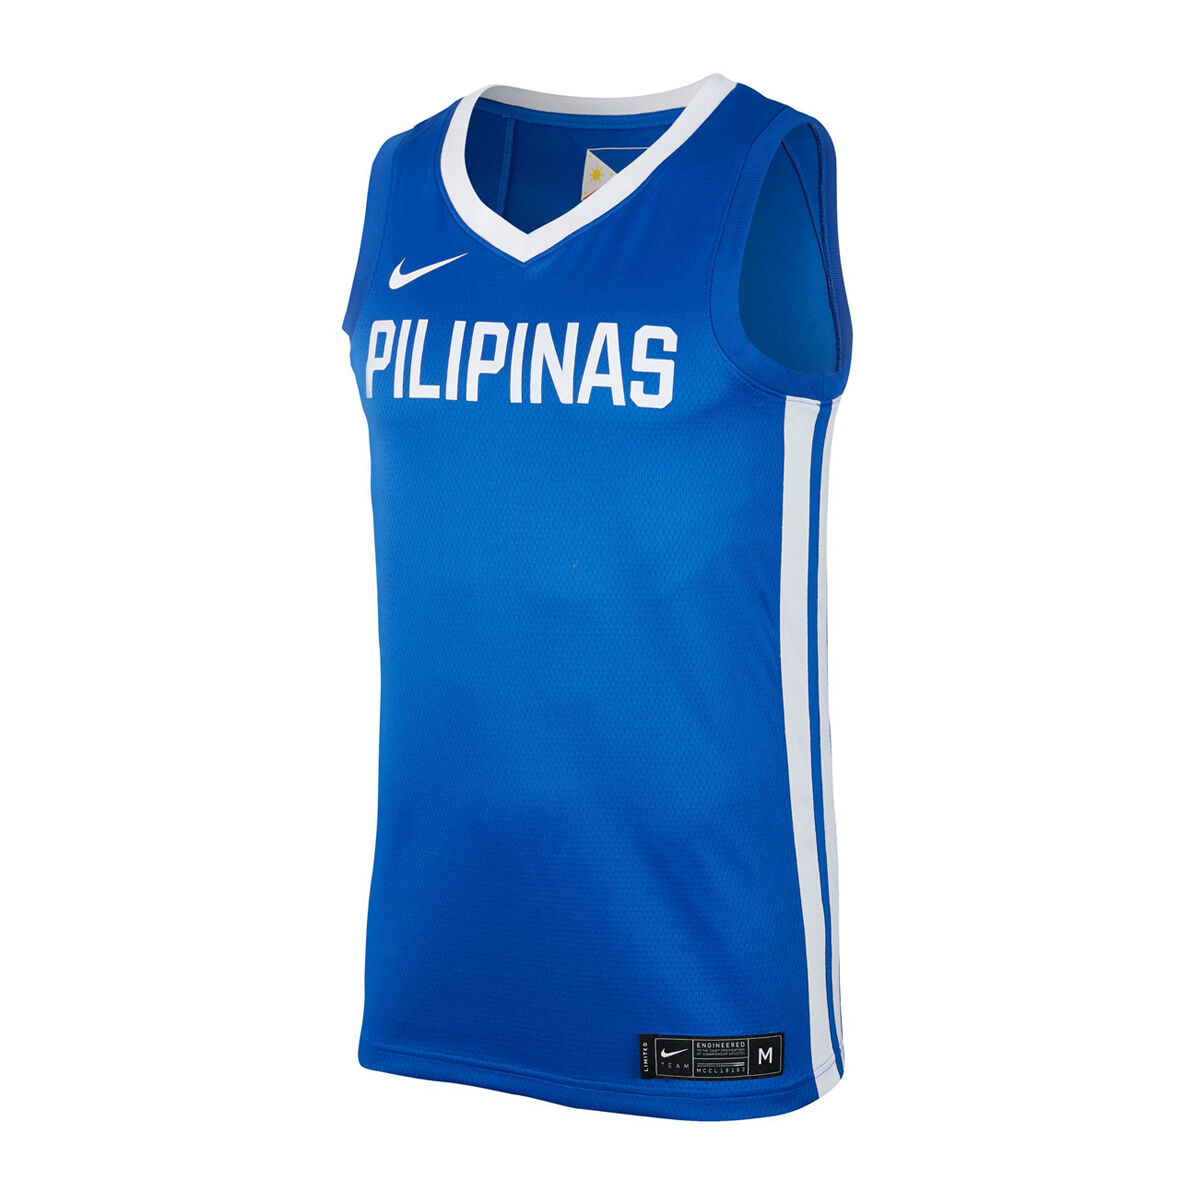  Pilipinas Basketball Wear, Gilas Pilipinas Casual Tee